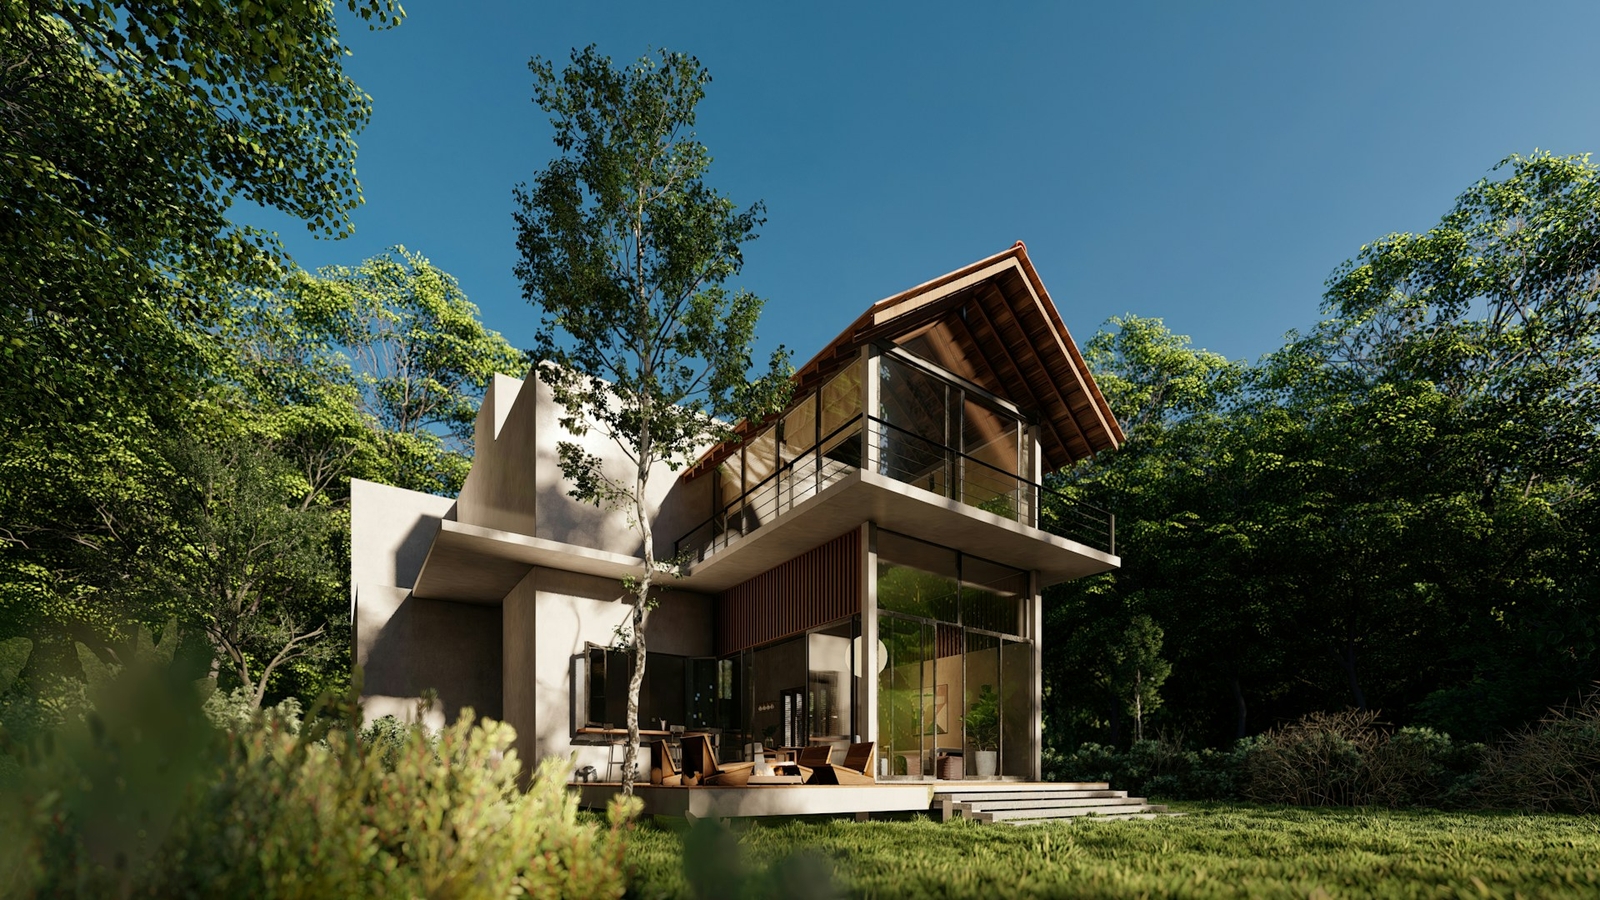 A modern house design set in amongst trees